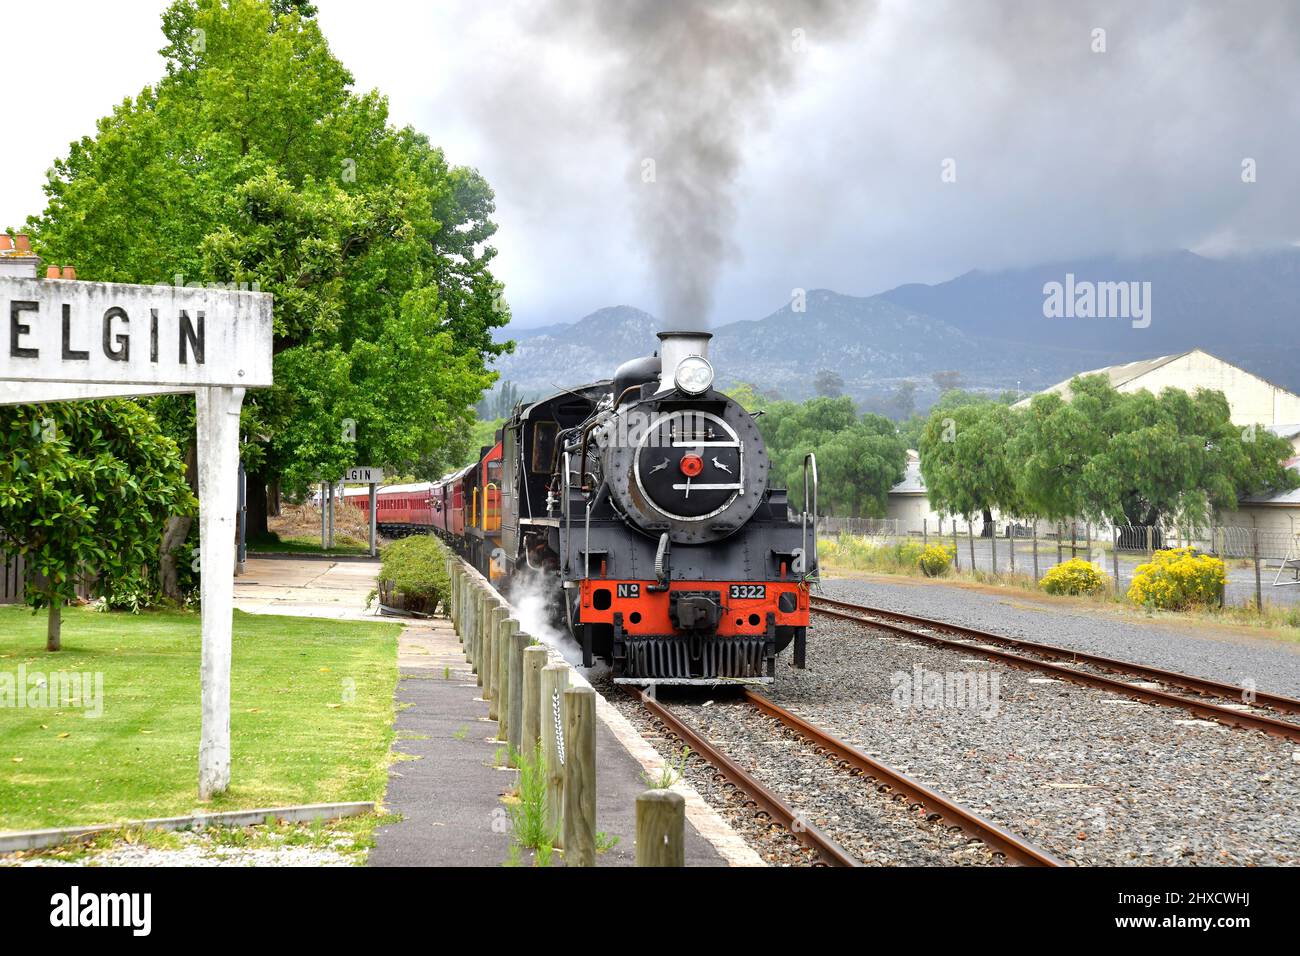 Dampflokomotive beim Betreten der Elgin Station, Westkap, Südafrika. Stockfoto